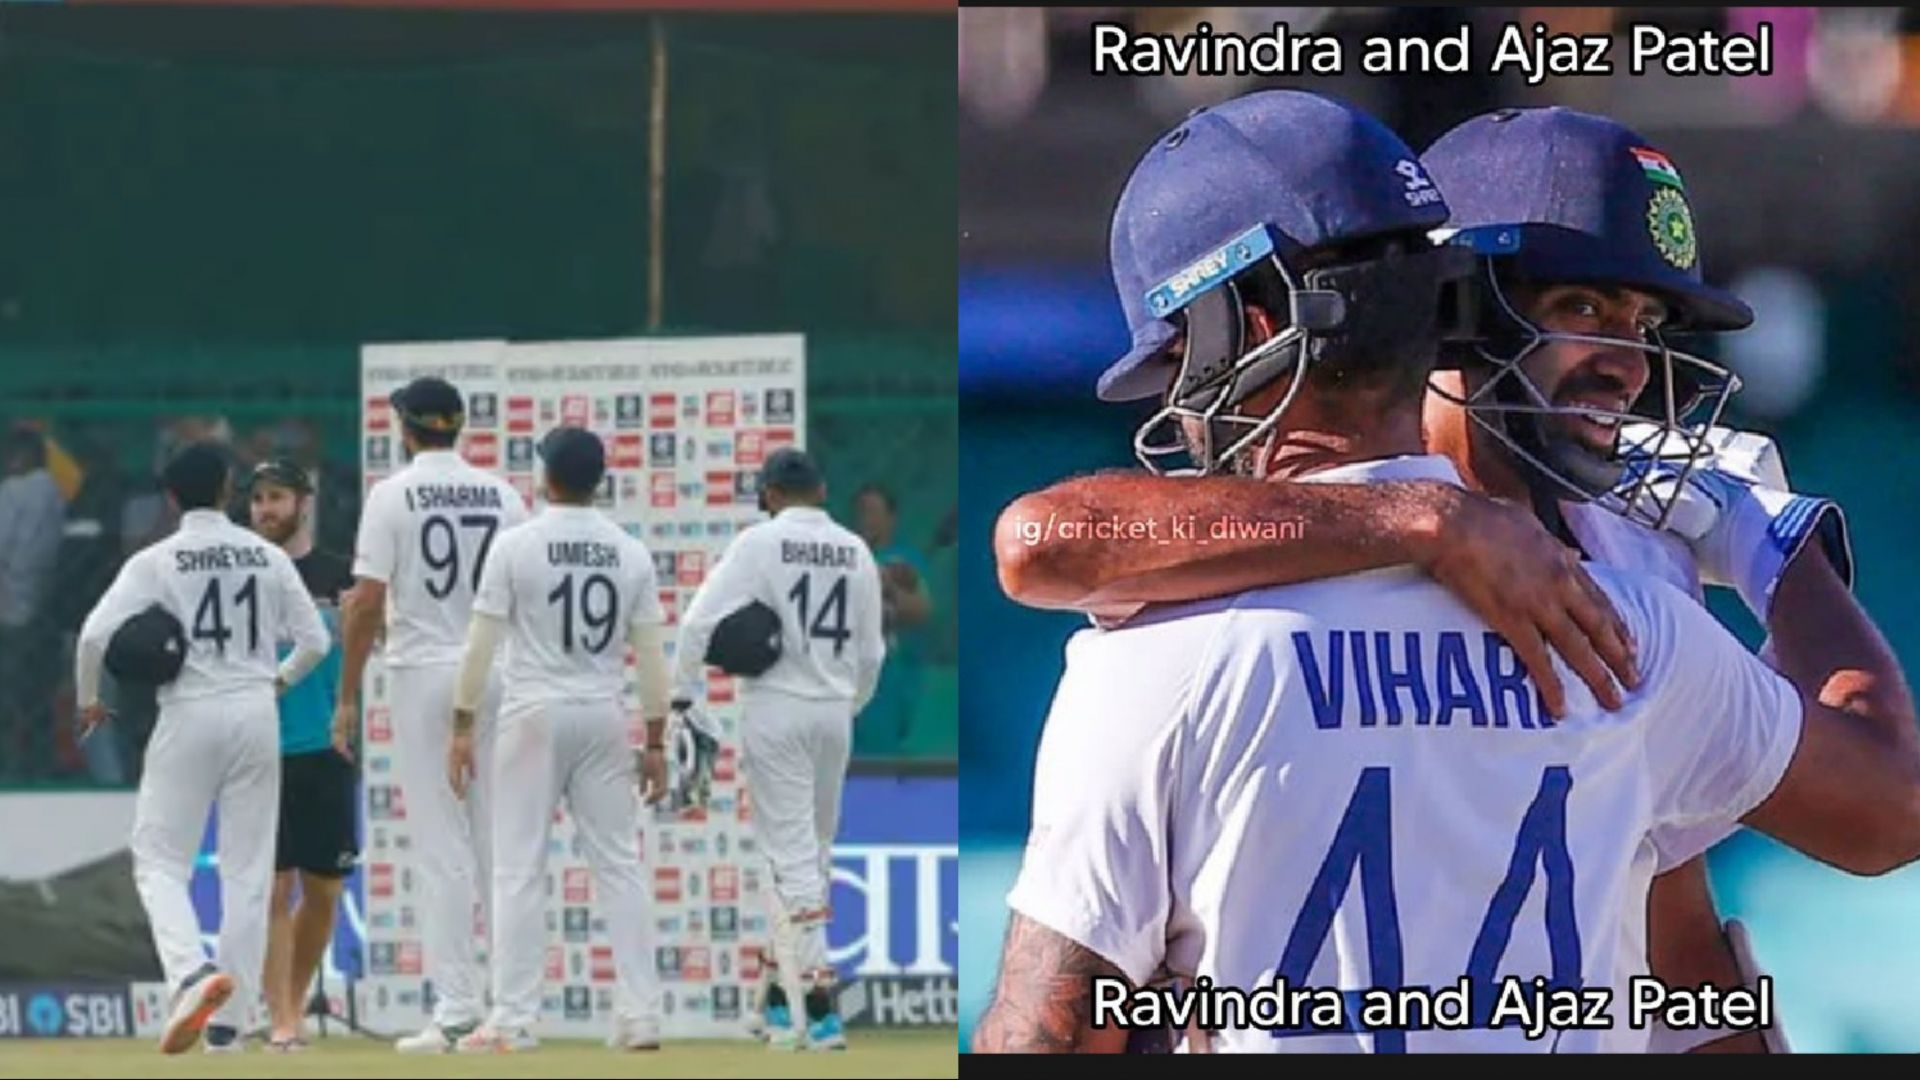 Rachin Ravindra and Ajaz Patel helped New Zealand save the Test against India just like Ravichandran Ashwin and Hanuma Vihari did it against Australia